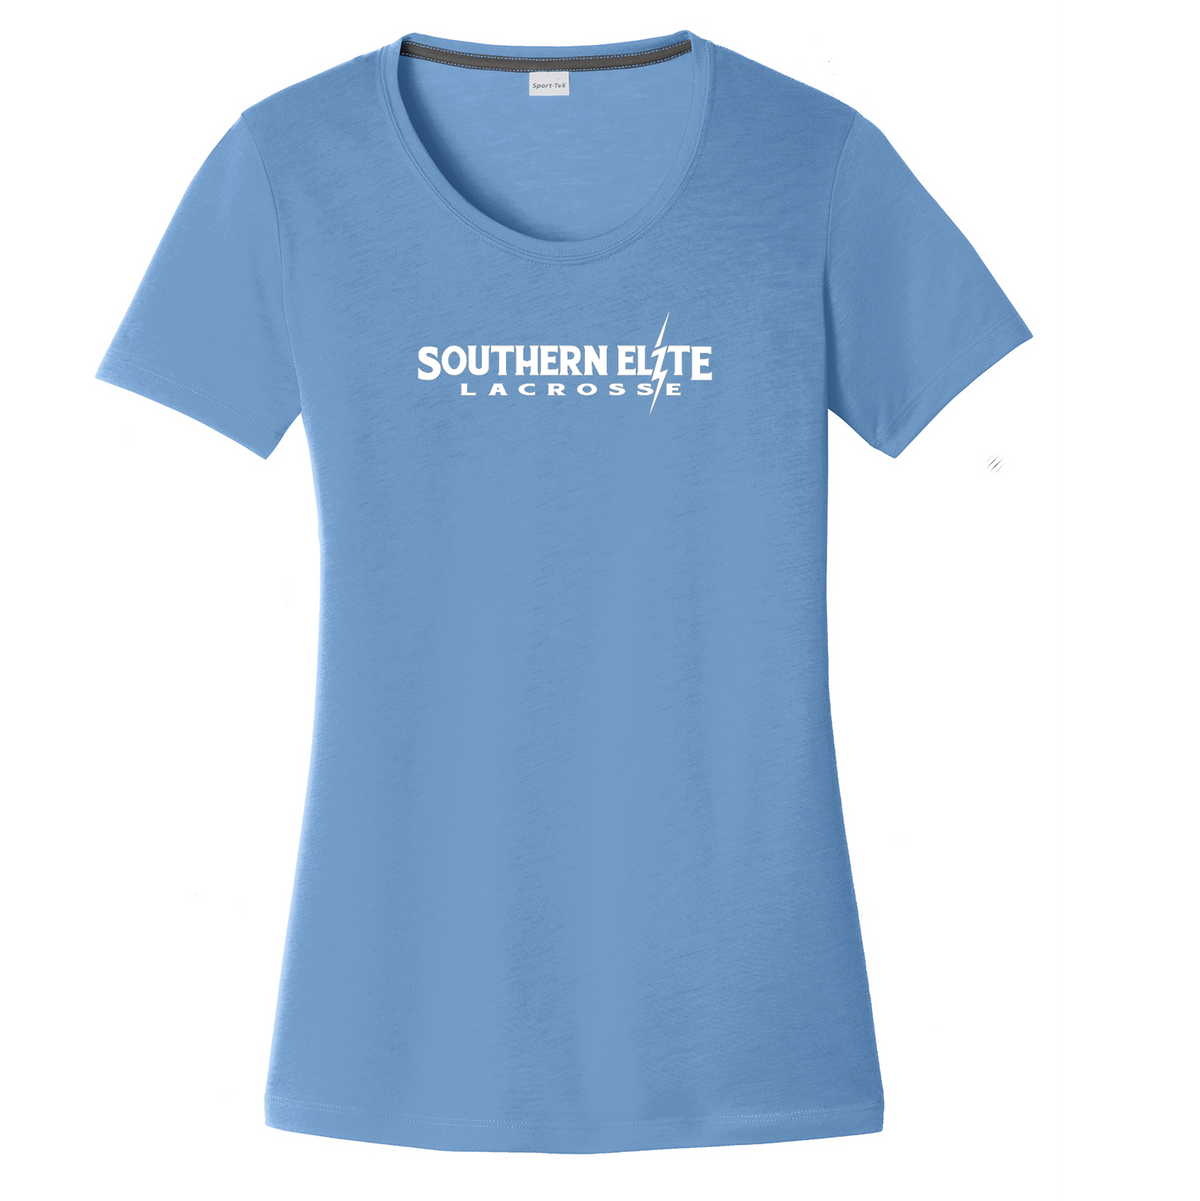 Southern Elite Lacrosse Women's CottonTouch Performance T-Shirt